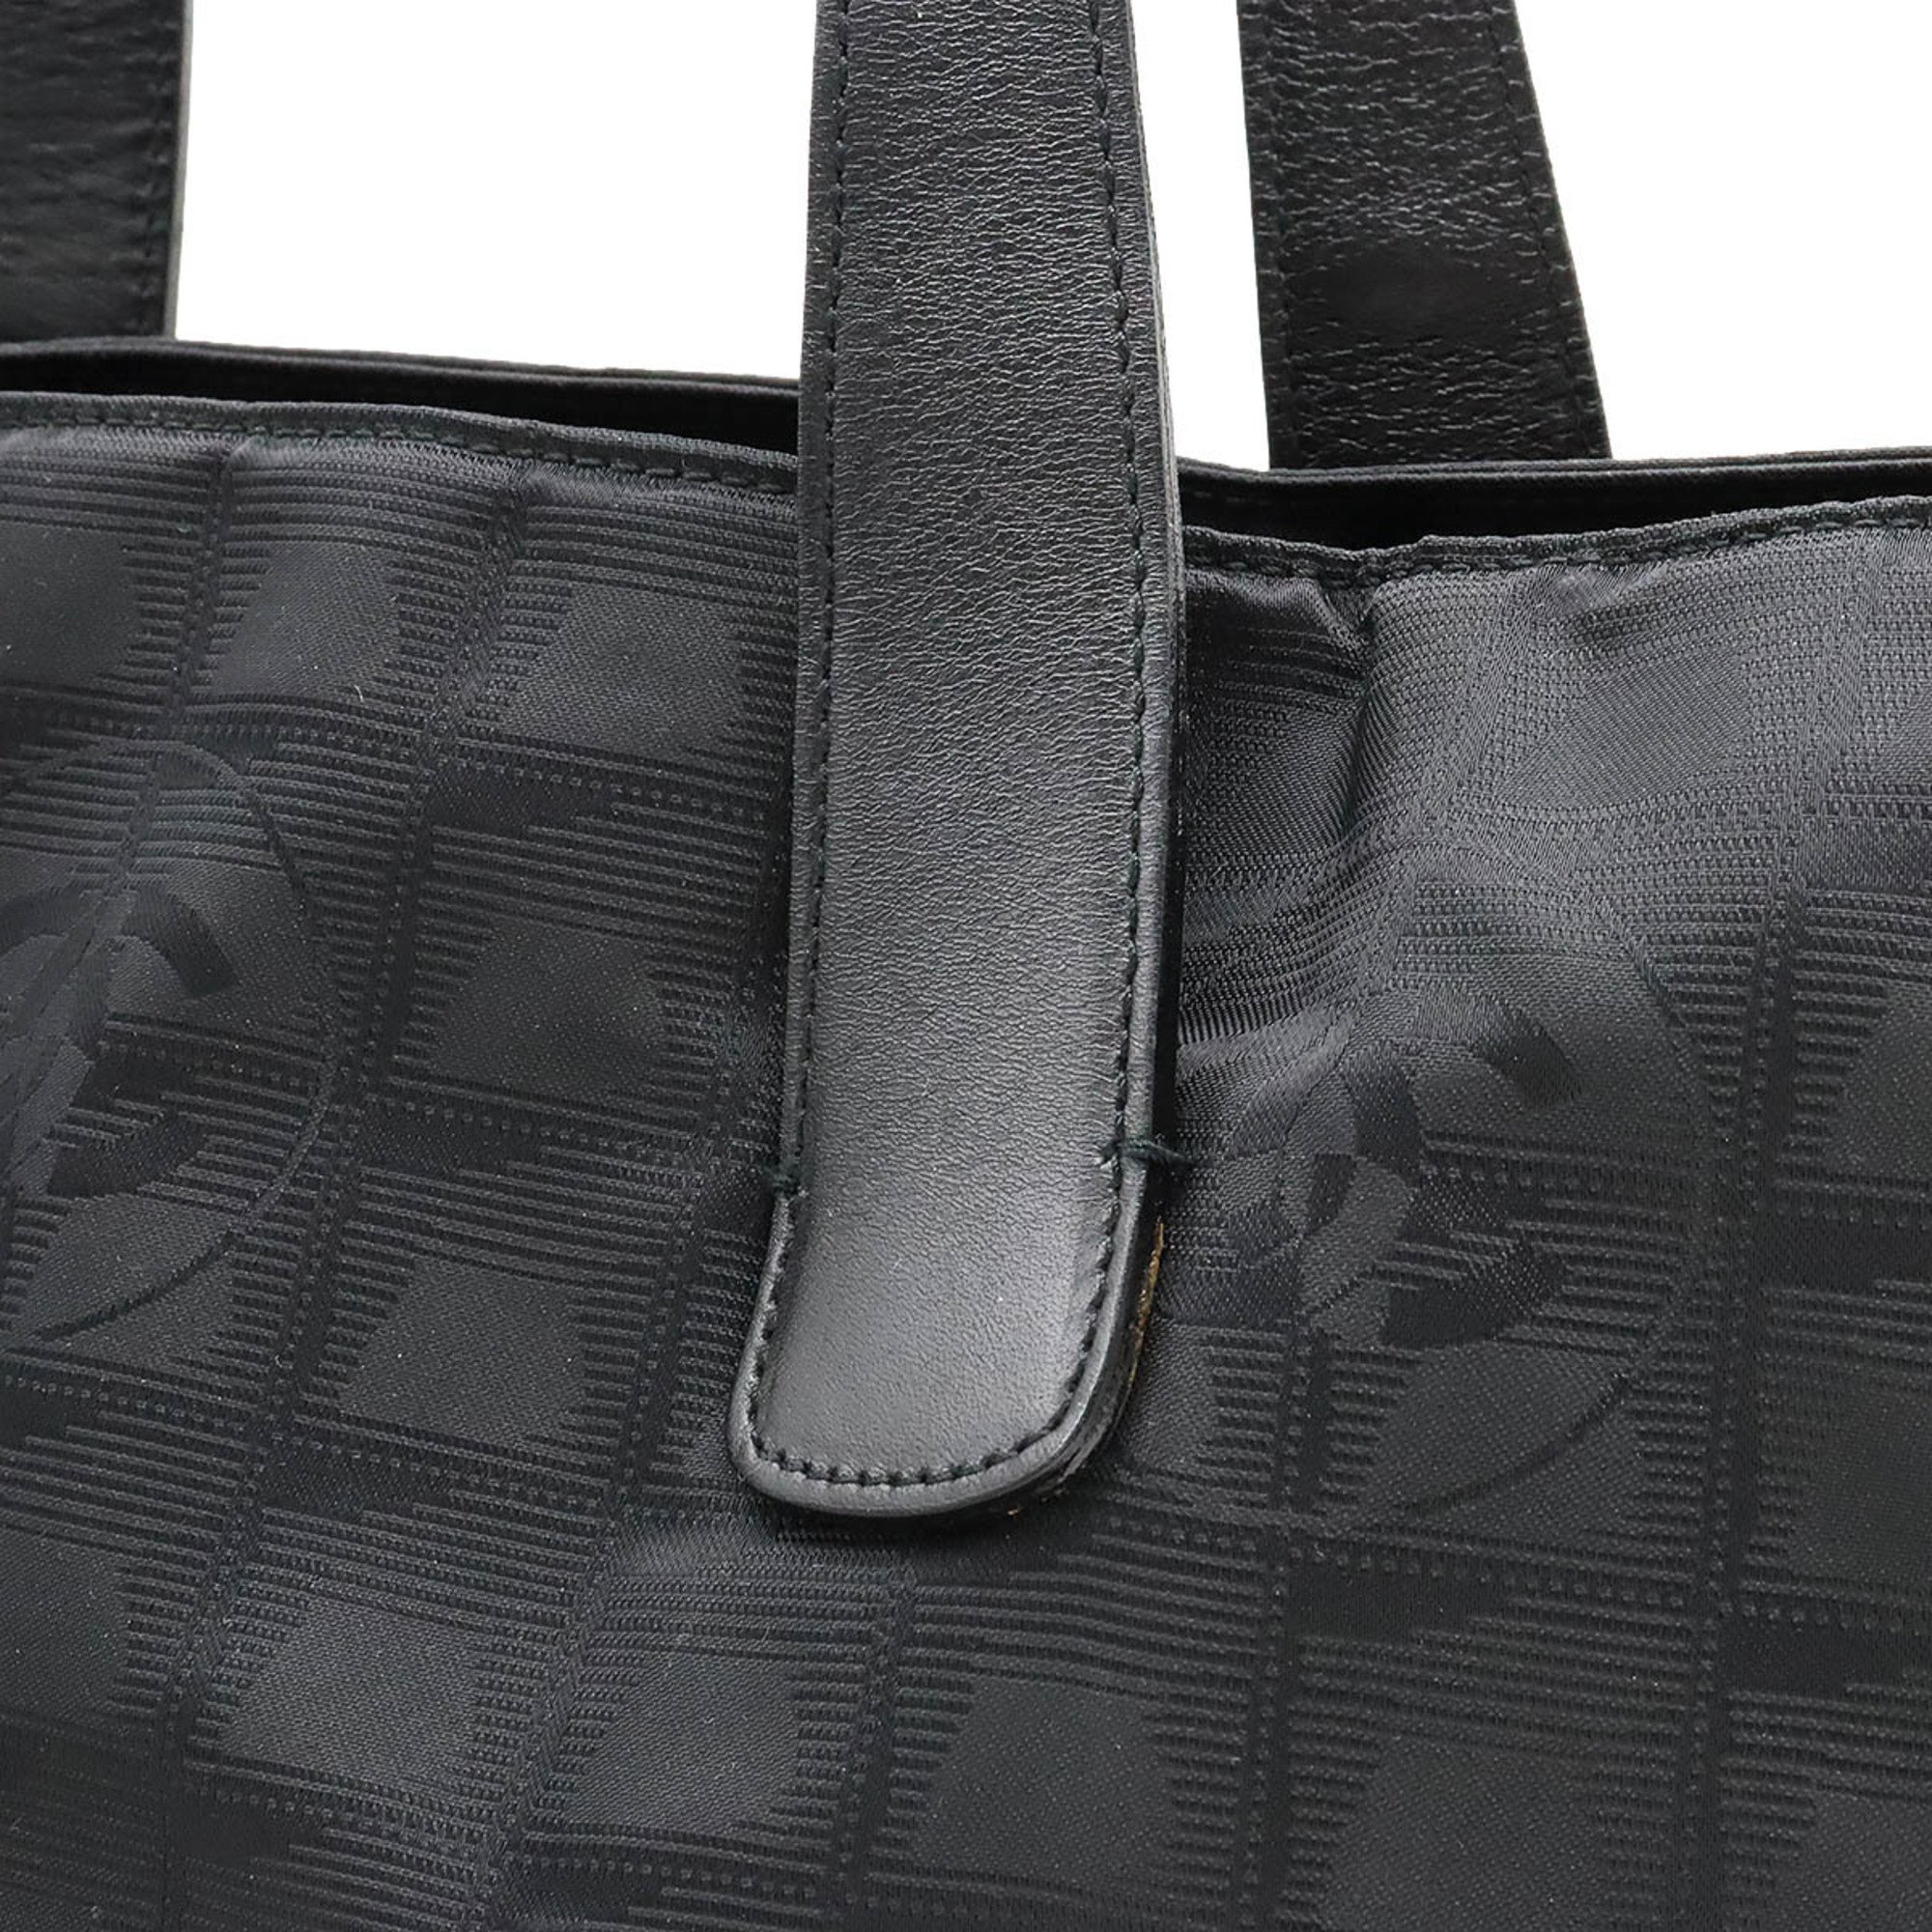 CHANEL New Line Tote TGM Bag Large Shoulder Nylon Jacquard Leather Black A15826